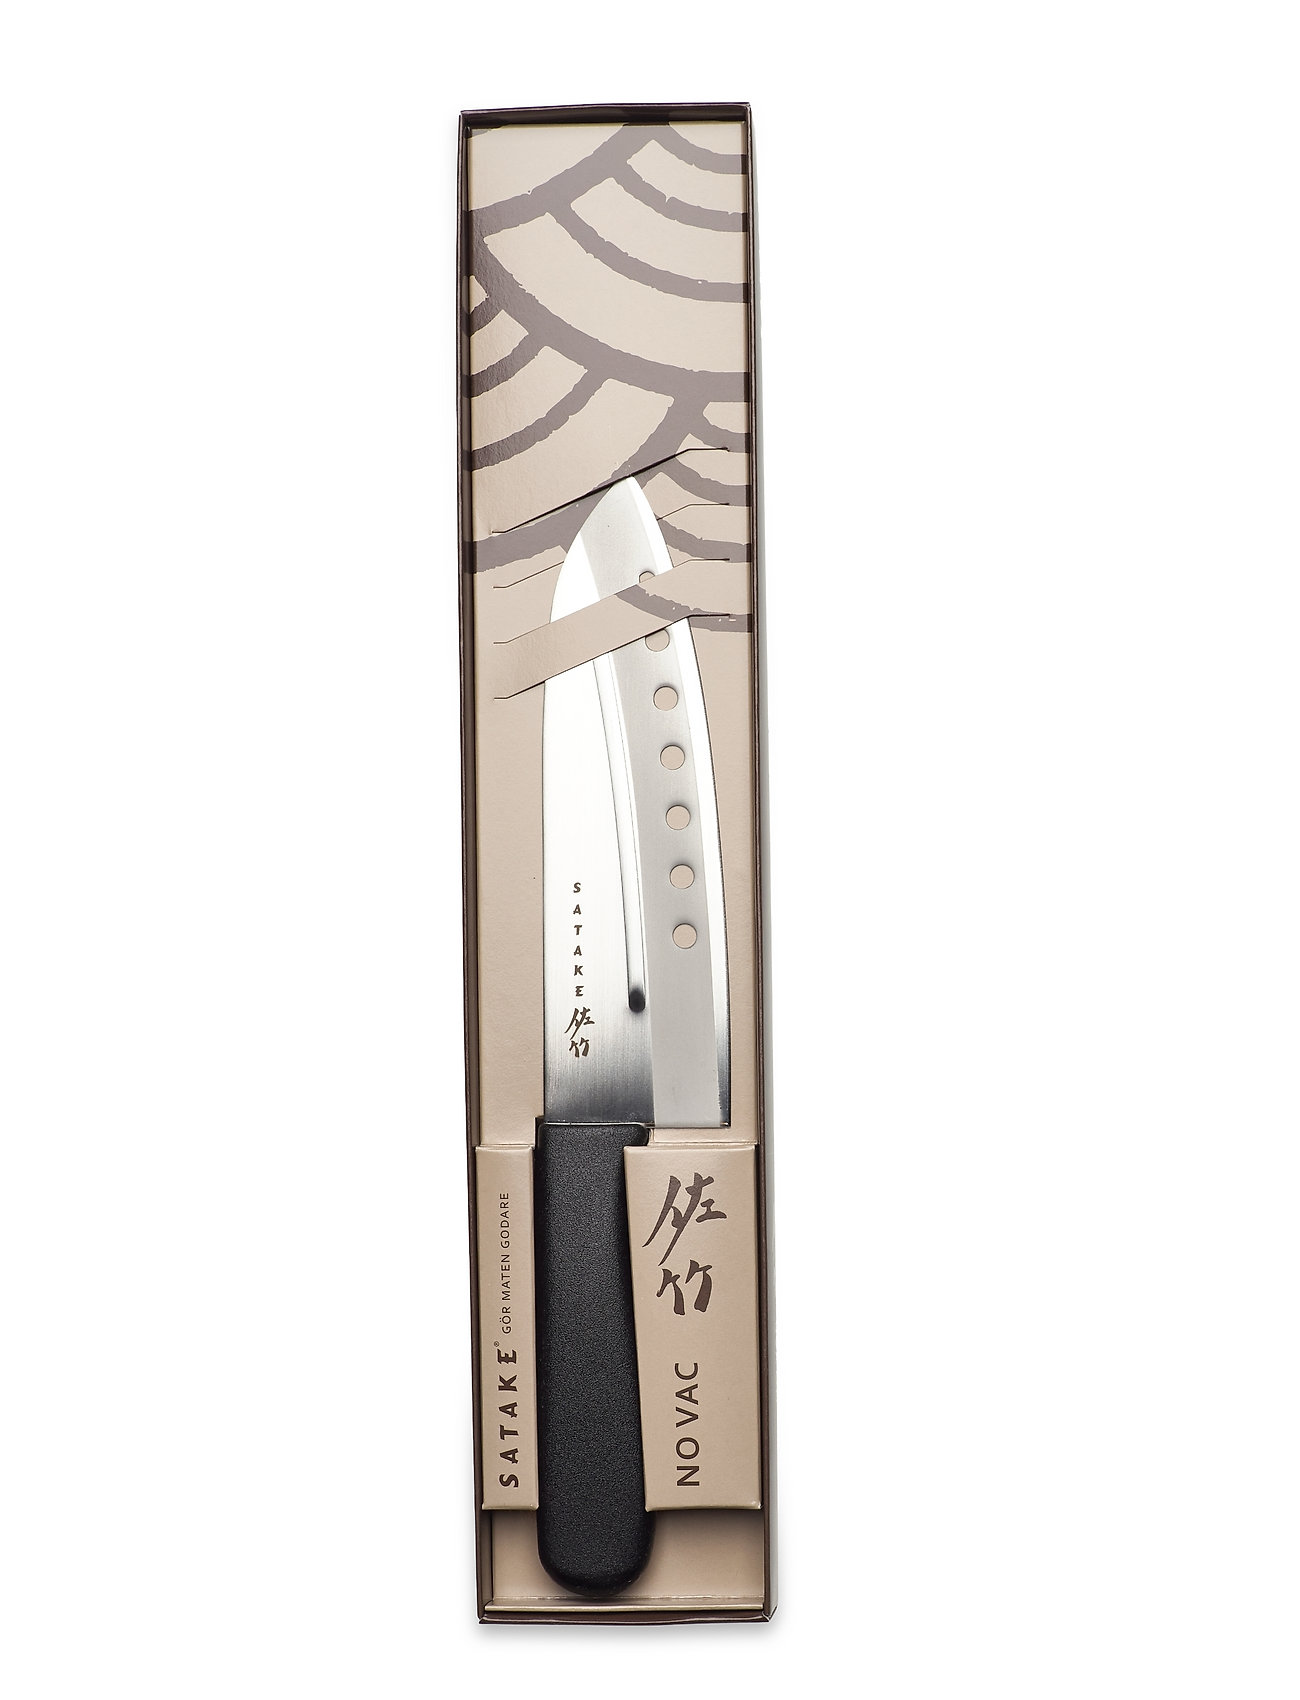 Satake No Vac Allround Knife 17 Cm Home Kitchen Knives & Accessories Chef Knives Black Satake